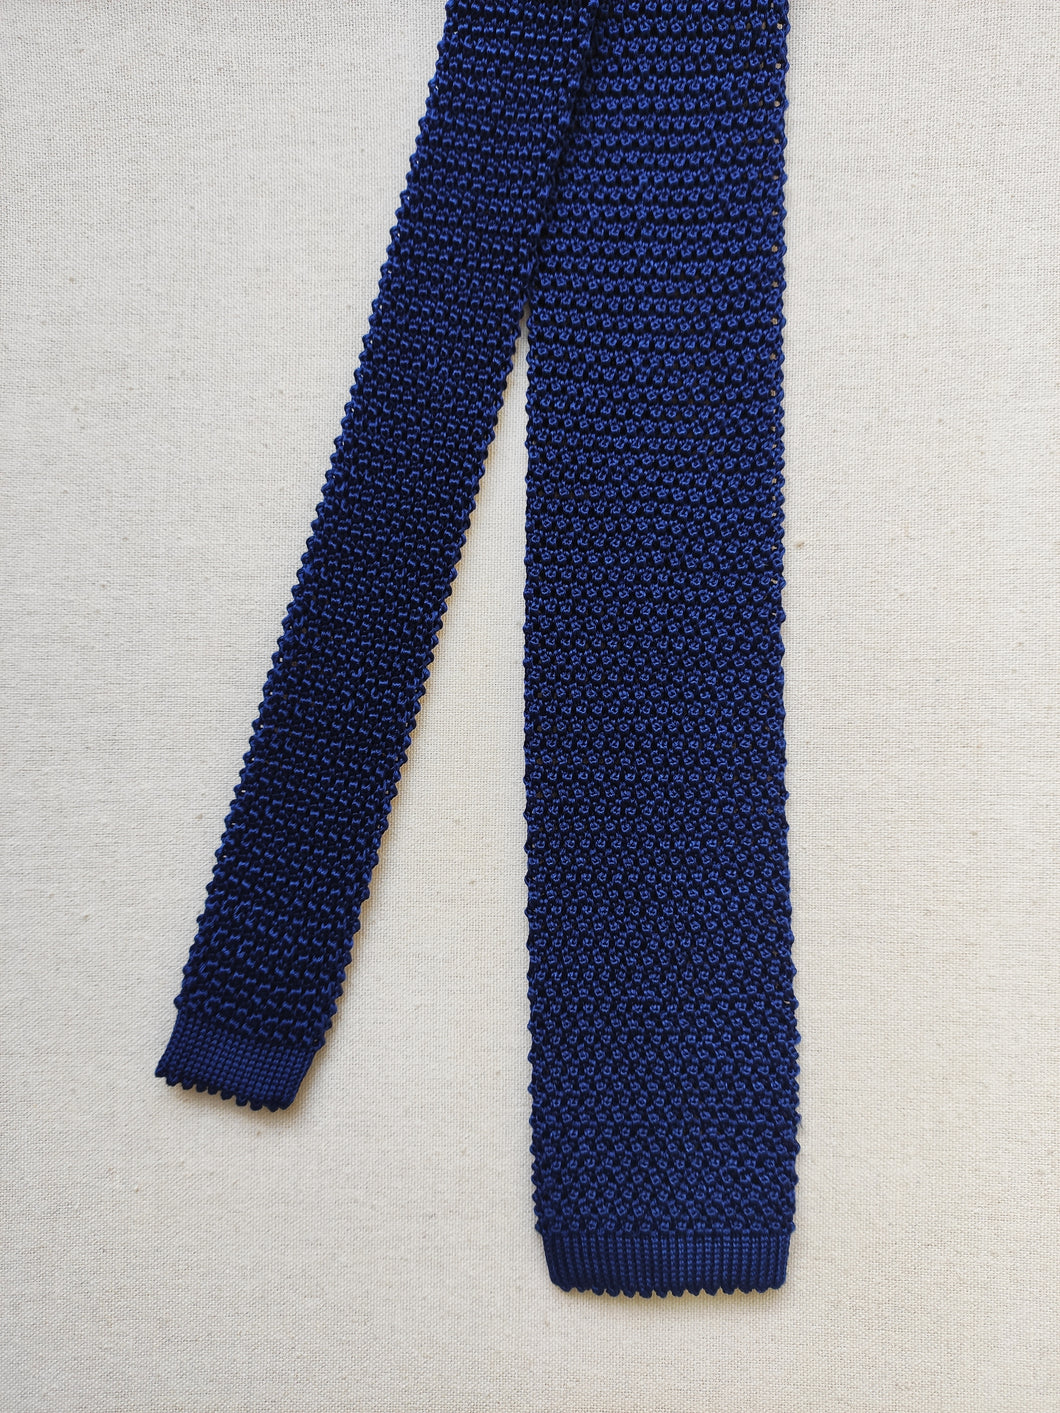 Franco Bassi cravate bleue en tricot de soie Made in Italy